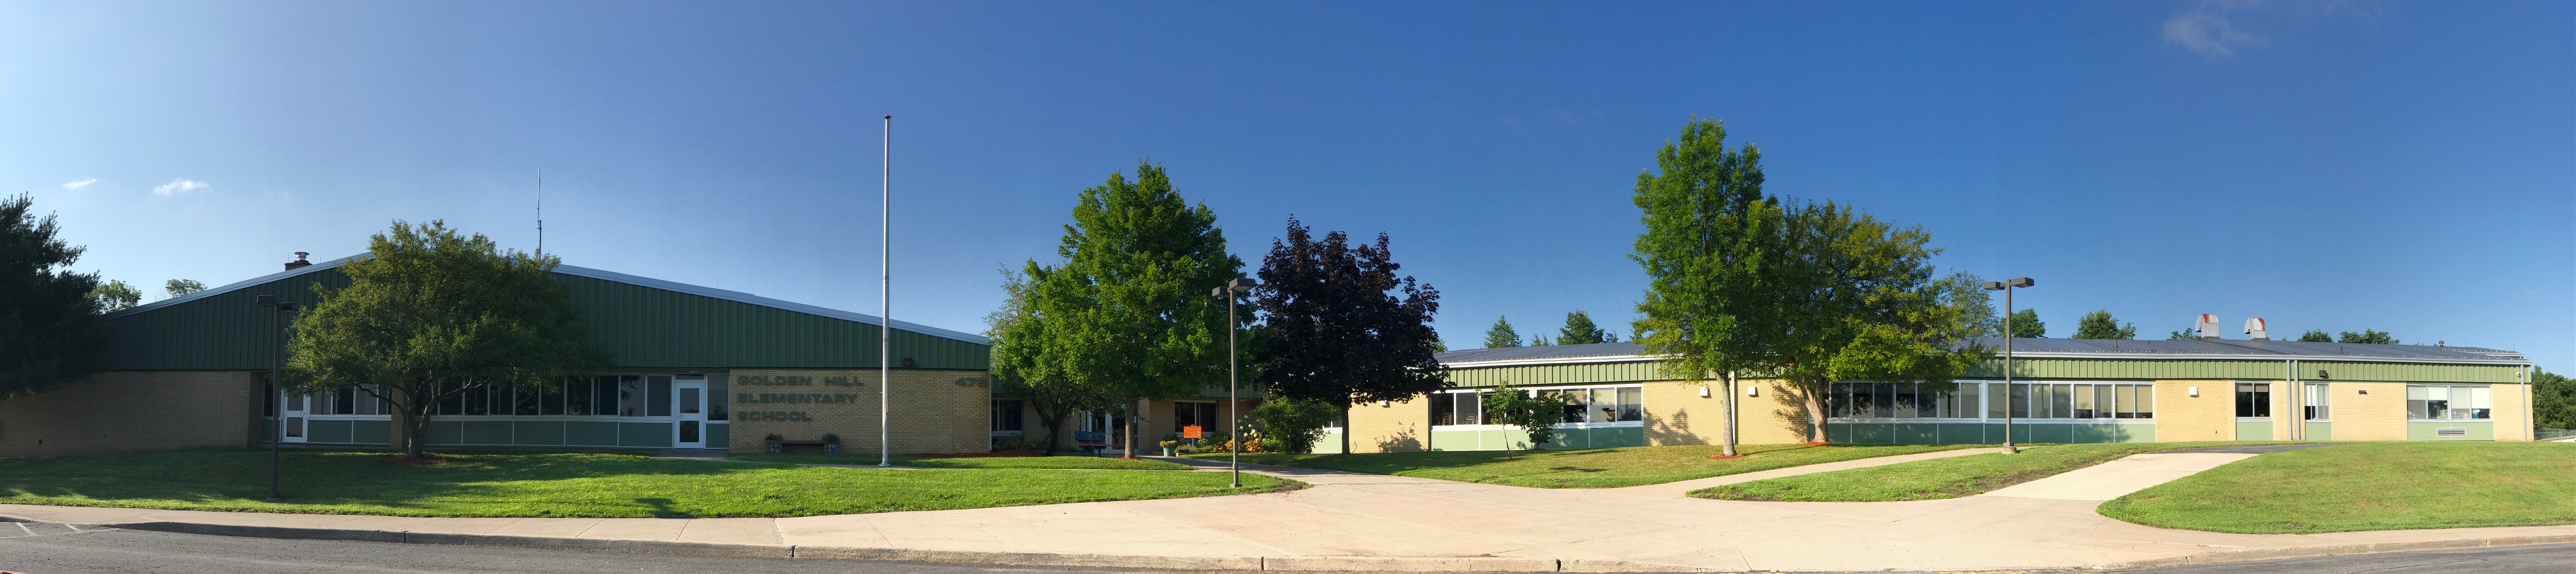 Golden Hill Elementary School Building